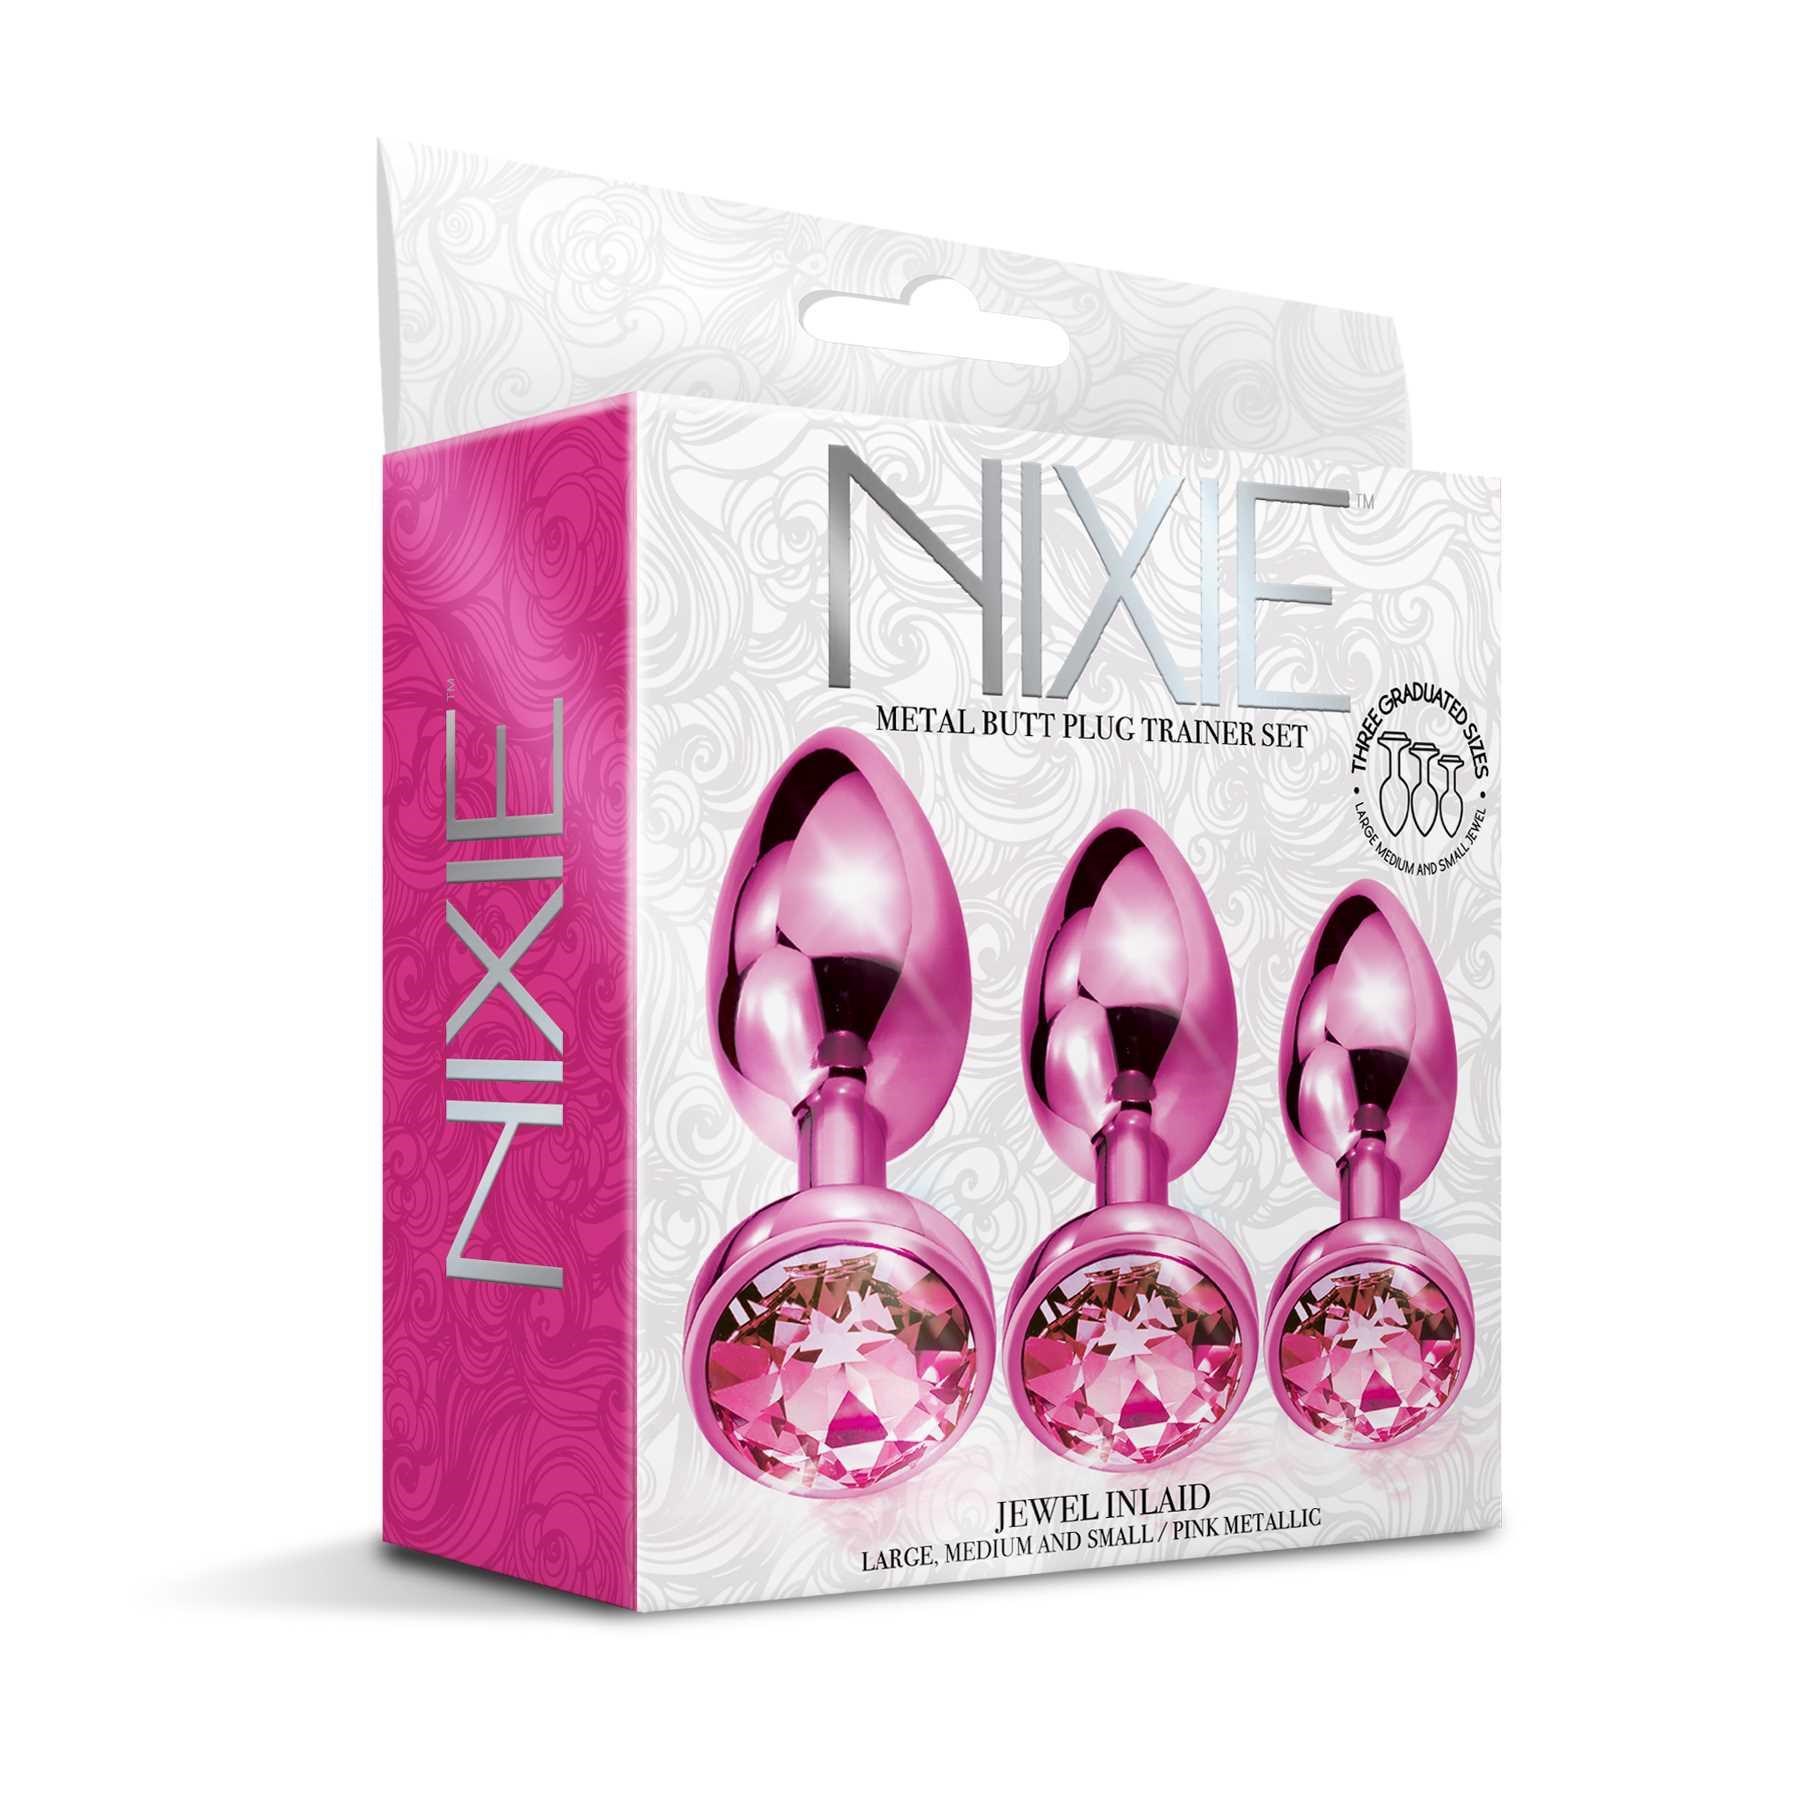 NIXIE Metal Butt Plug Trainer Set Metallic pink packaging